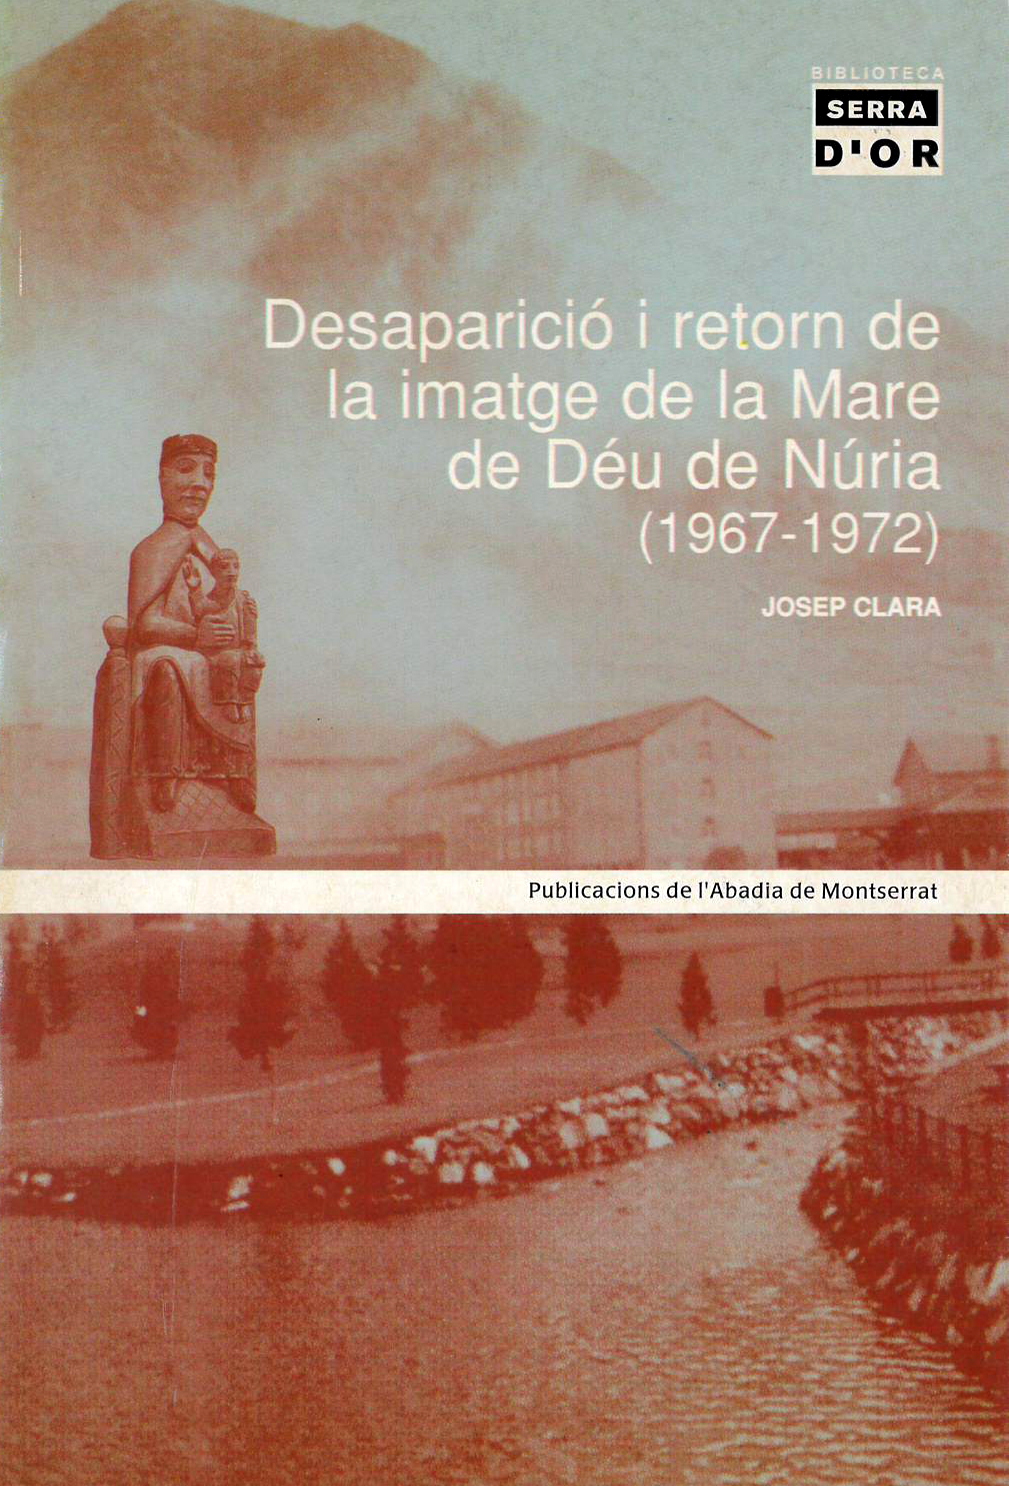 Josep Clara i Resplandis